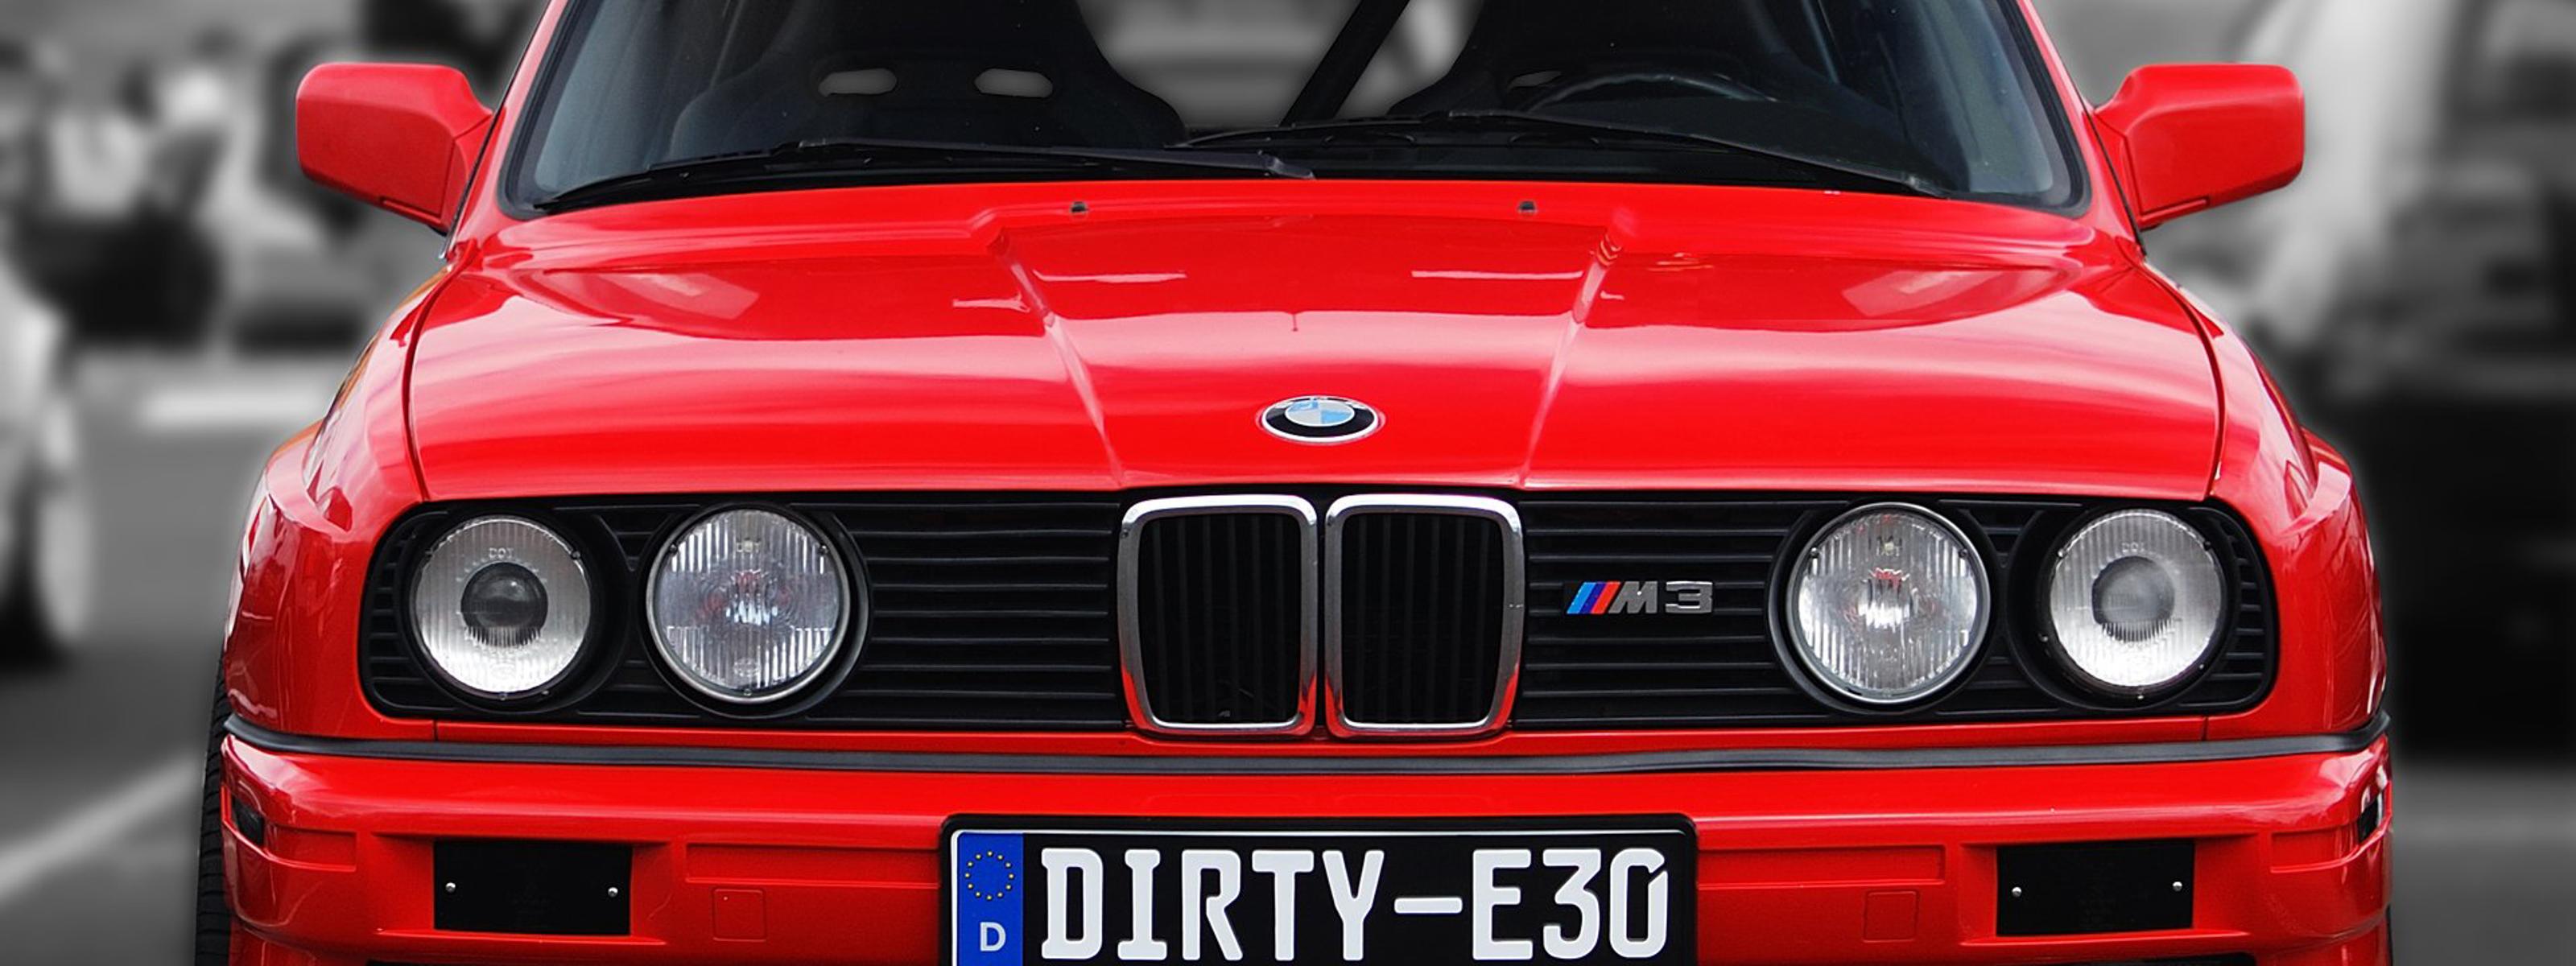 Red BMW M3 E30 - Car wallpaper